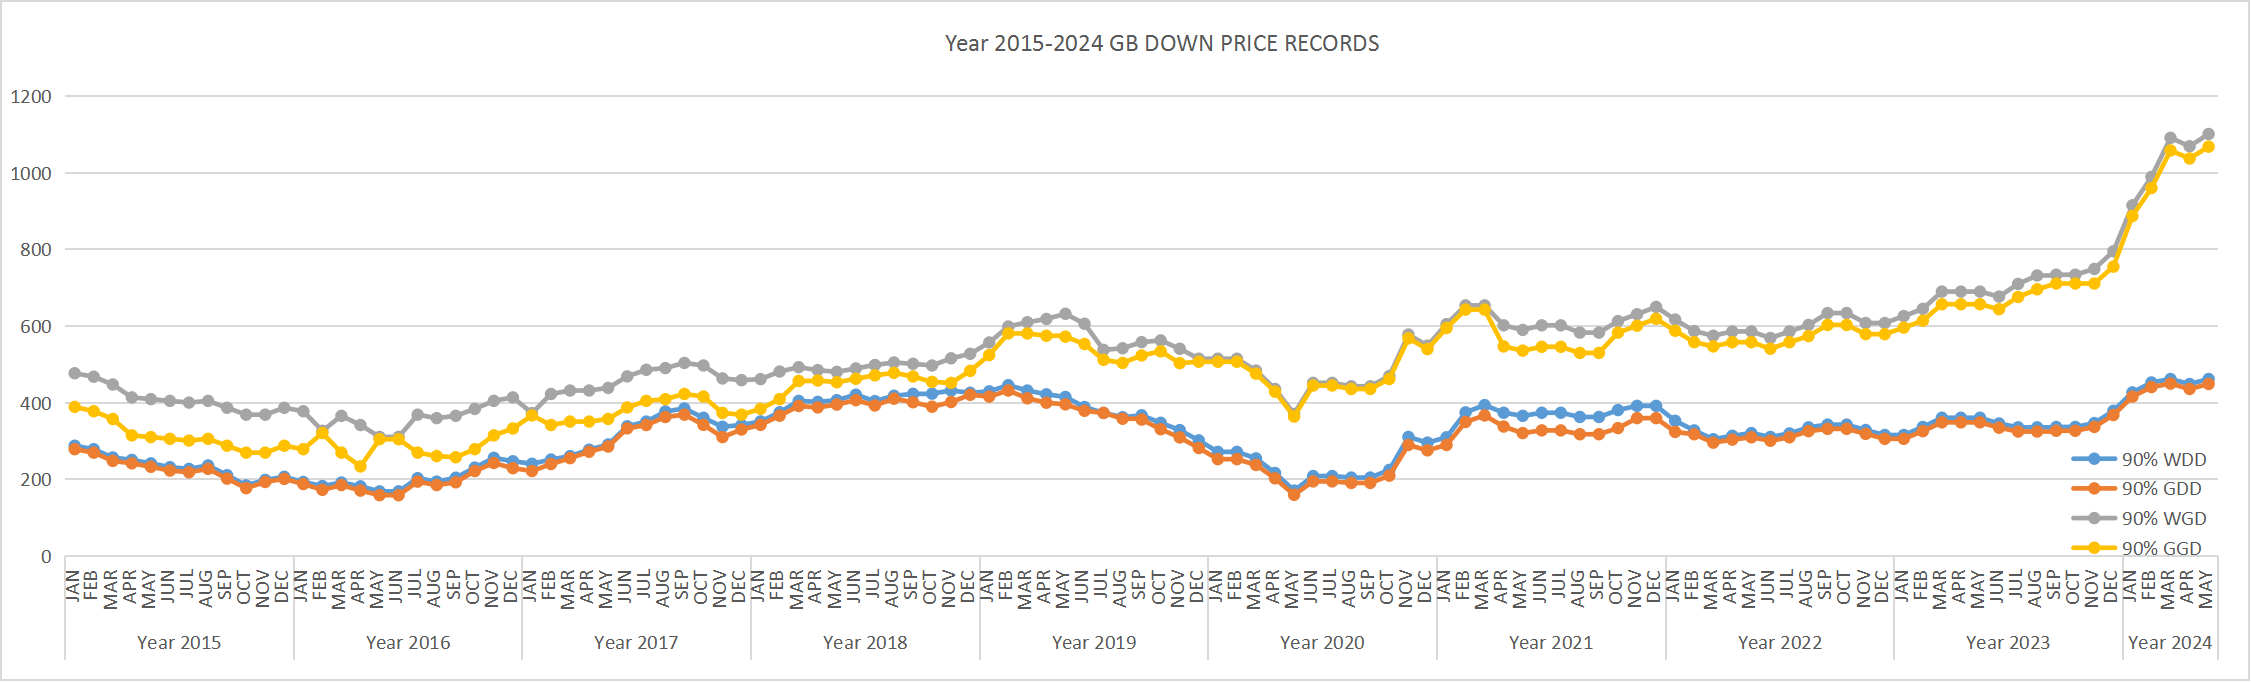 2015-2024 GB DOWN PRICE RECORDS